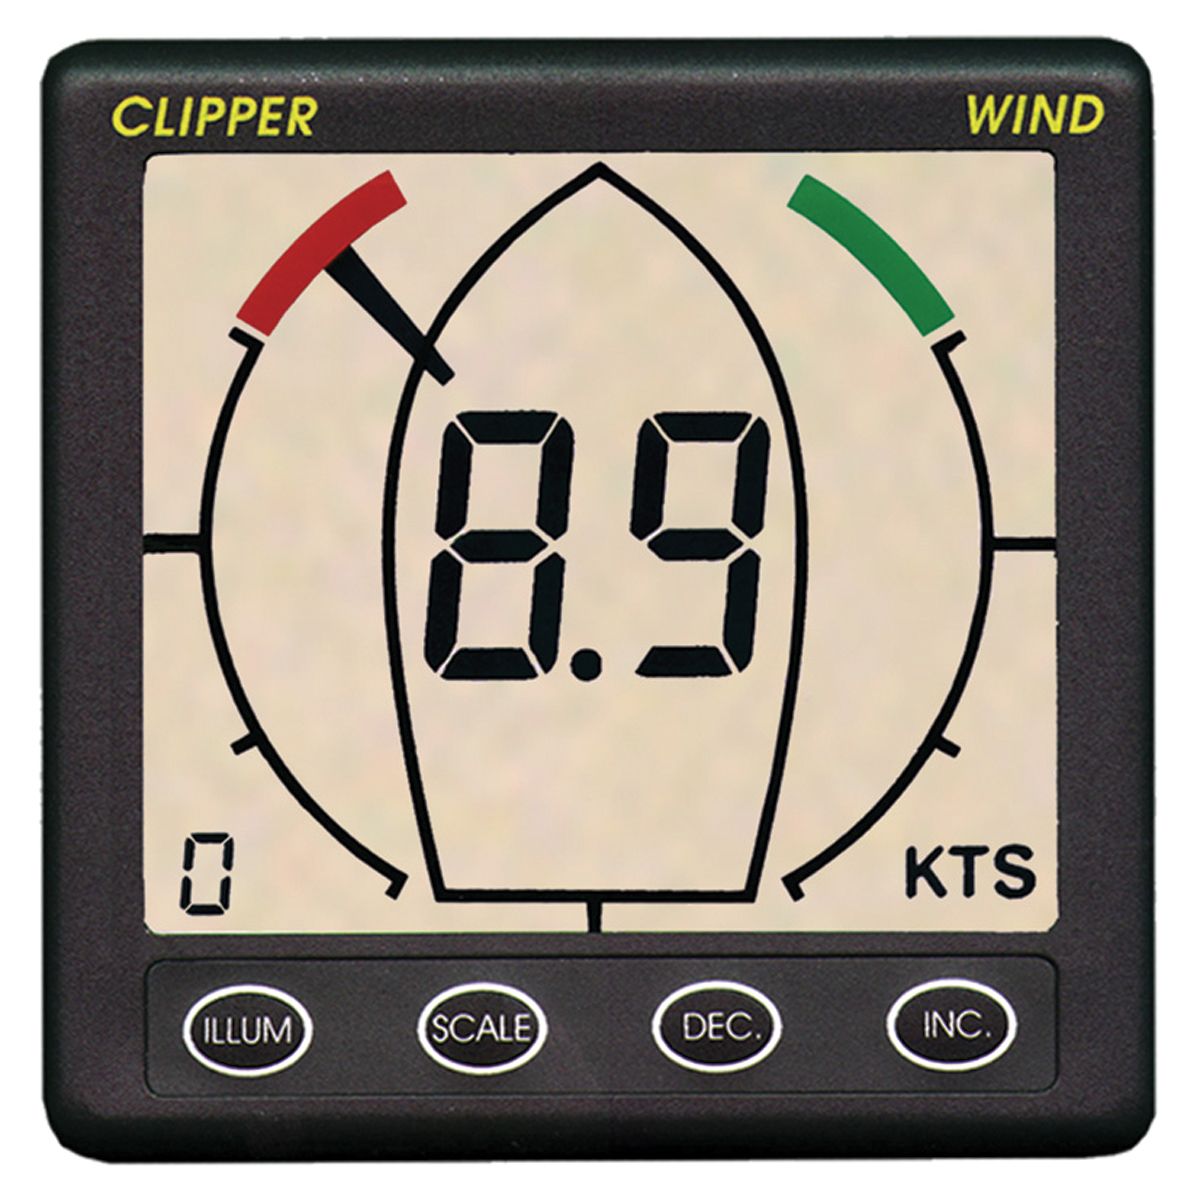 Nasa Target 2 Wind Speed & Direction System V2 - 523-TAR-WINDV2